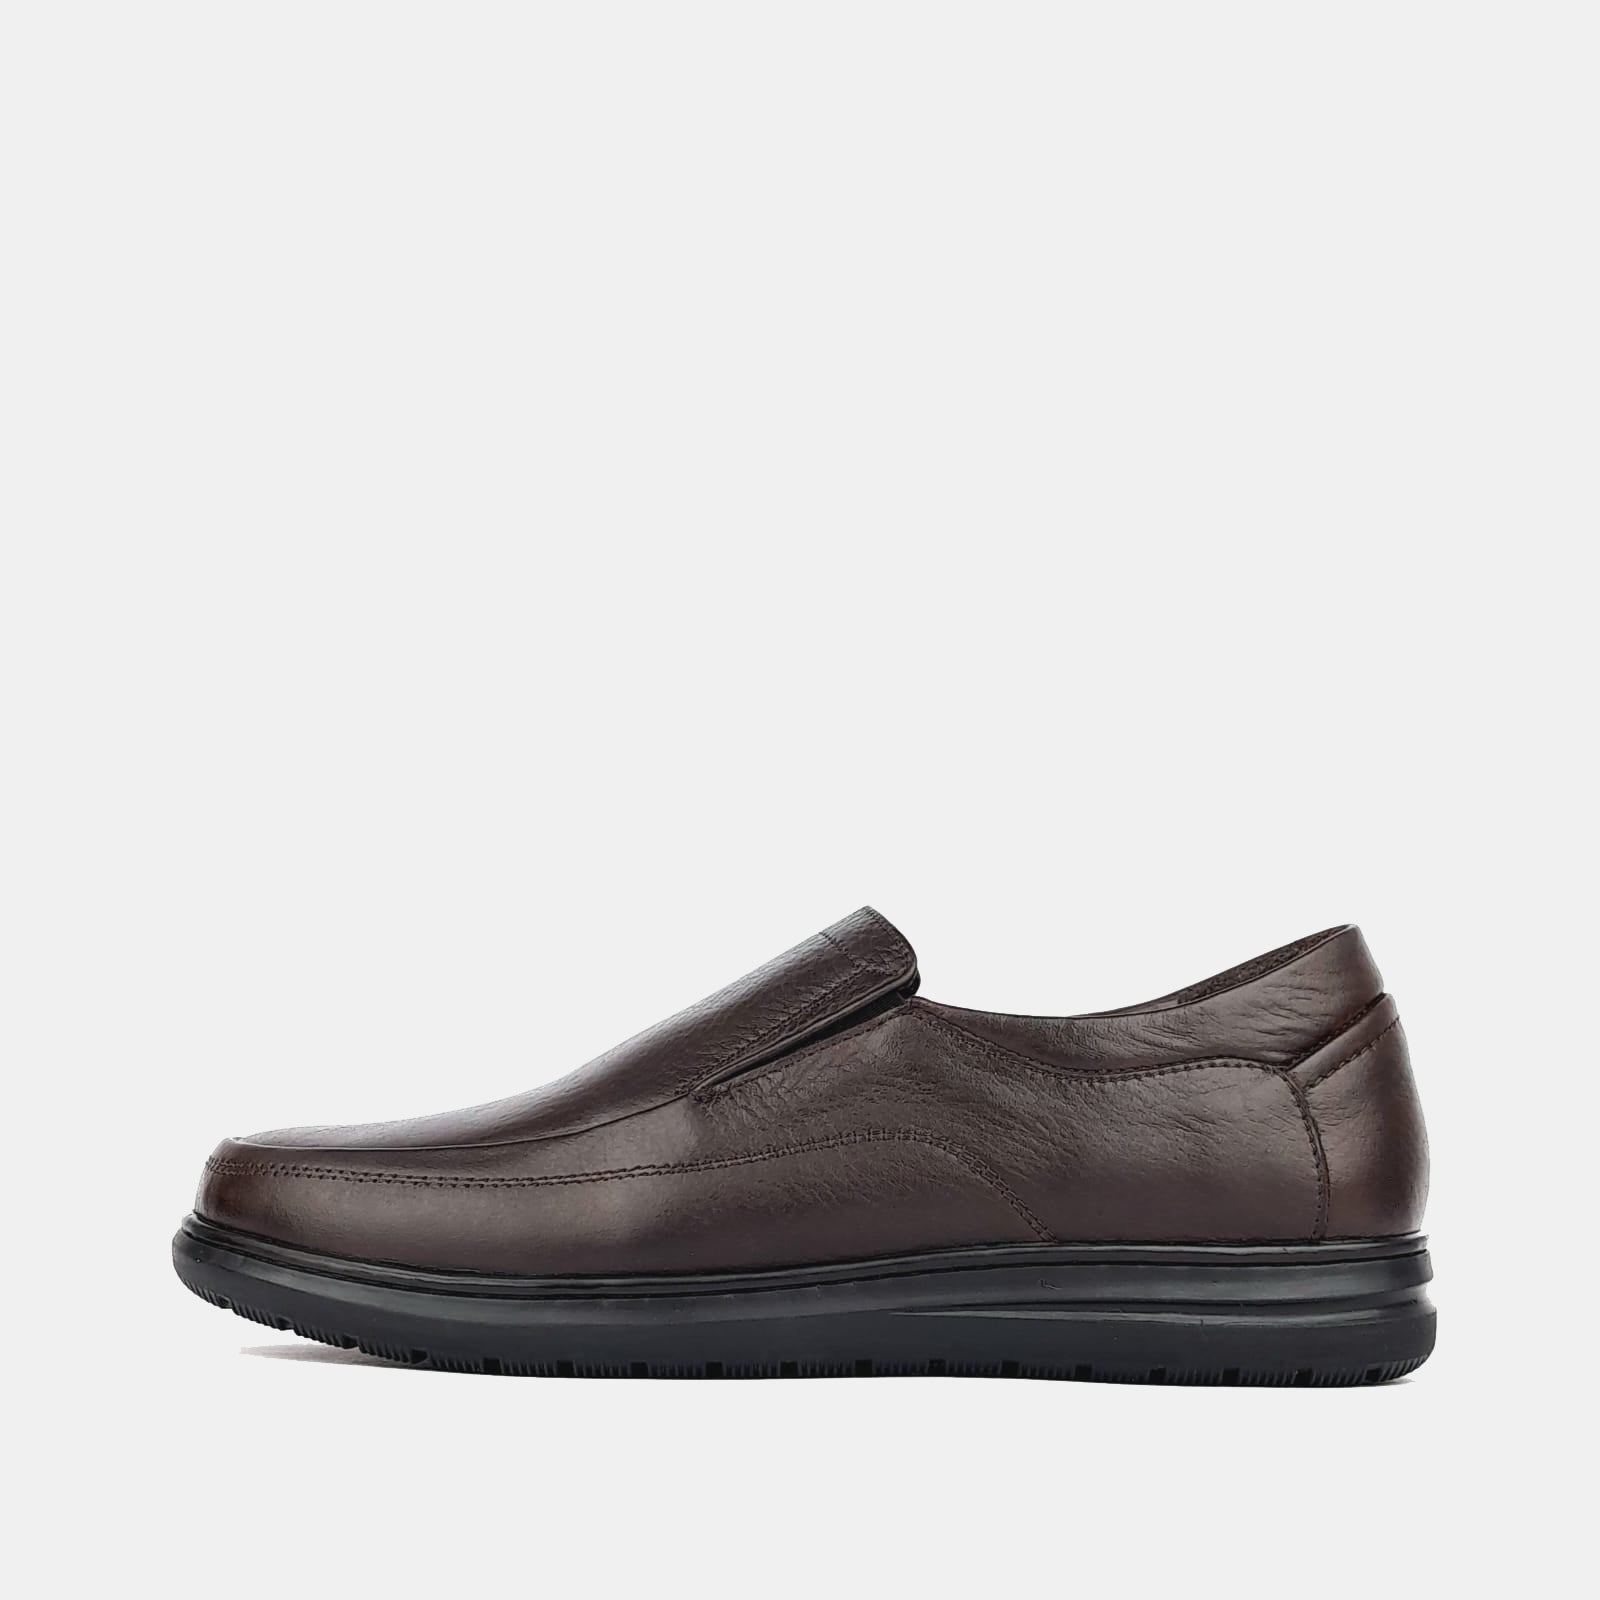 2041 S Chaussure en cuir marron